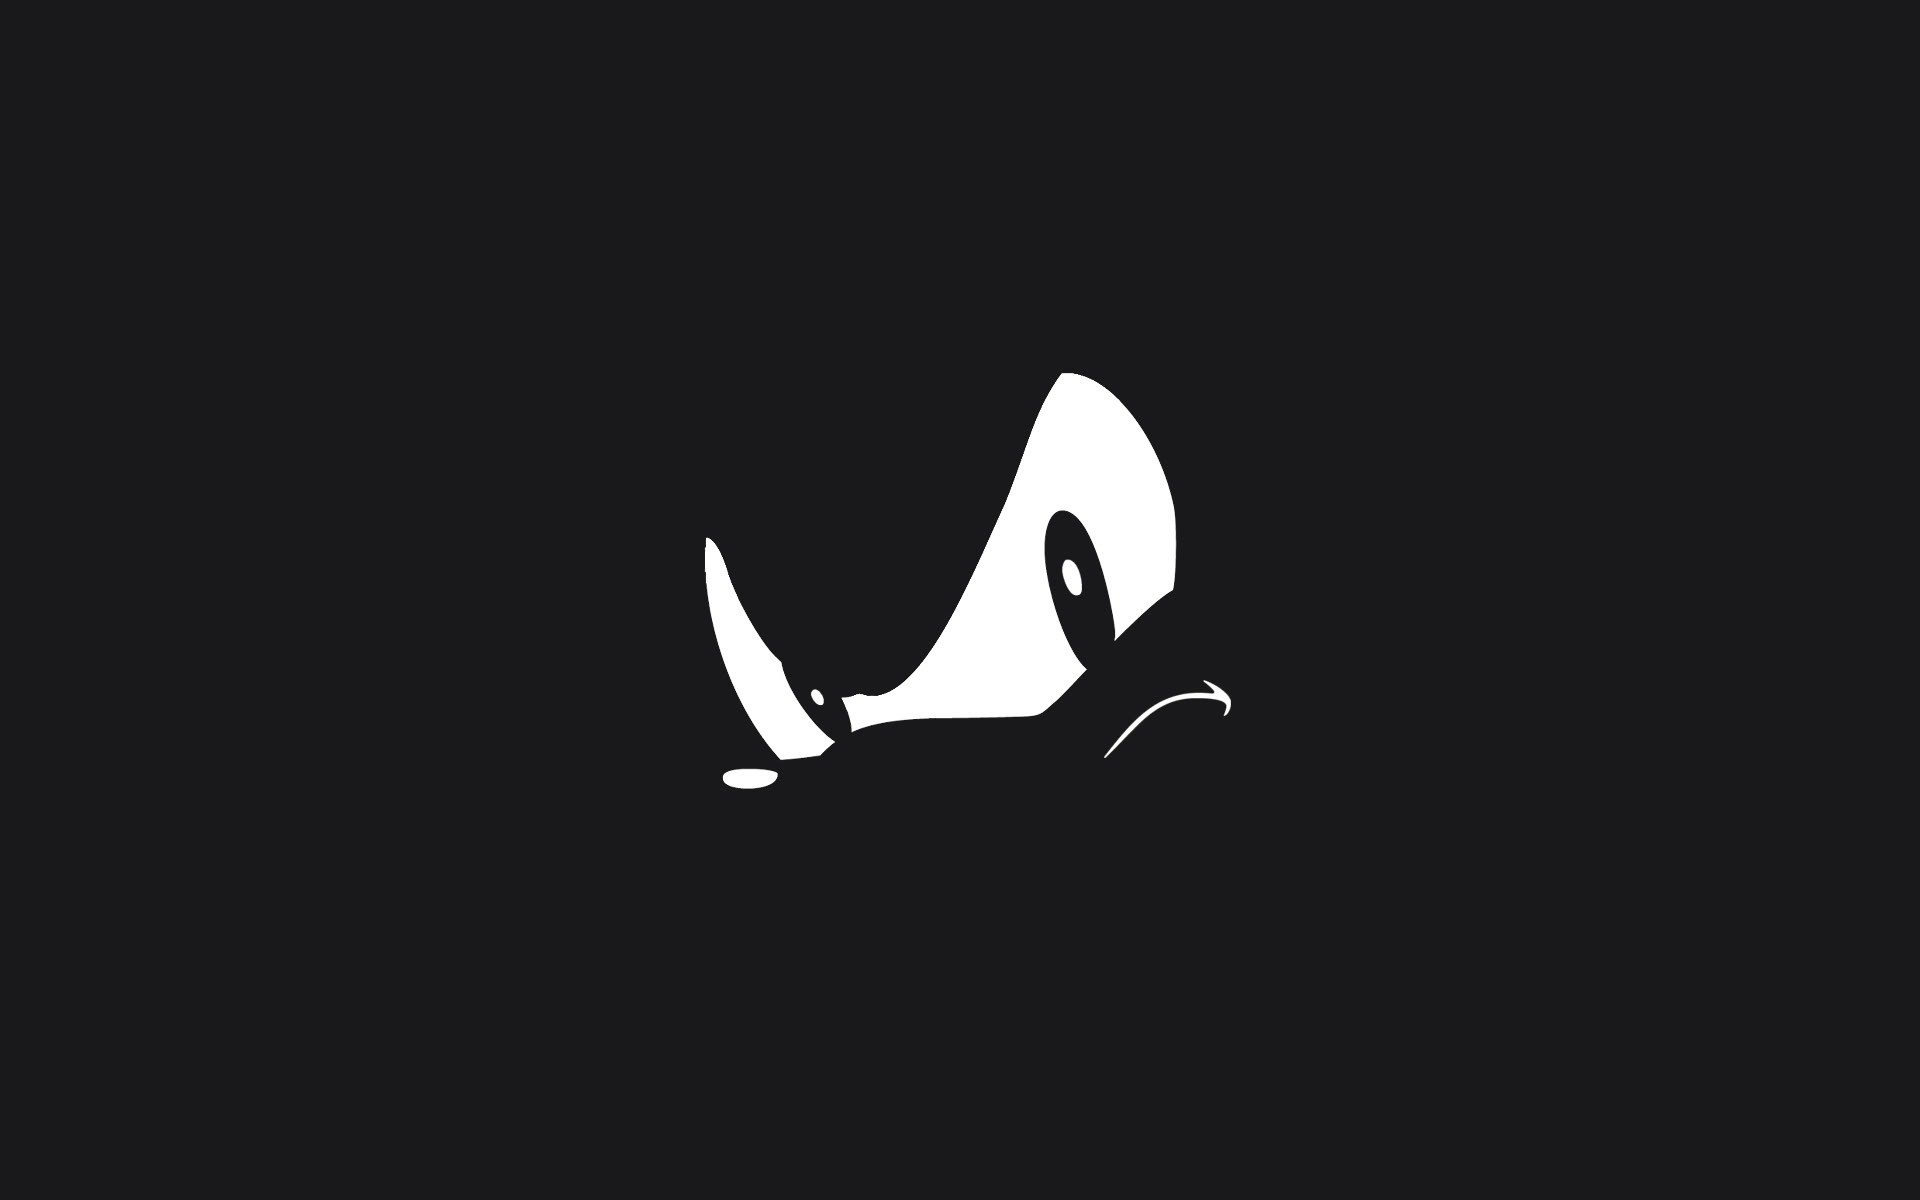 1920x1200 Wallpaper : illustration, minimalism, logo, Sonic the Hedgehog, moustache, brand, Shadow the Hedgehog, wing, computer wallpaper, font BosnianEagle 191070 HD Wallpapers